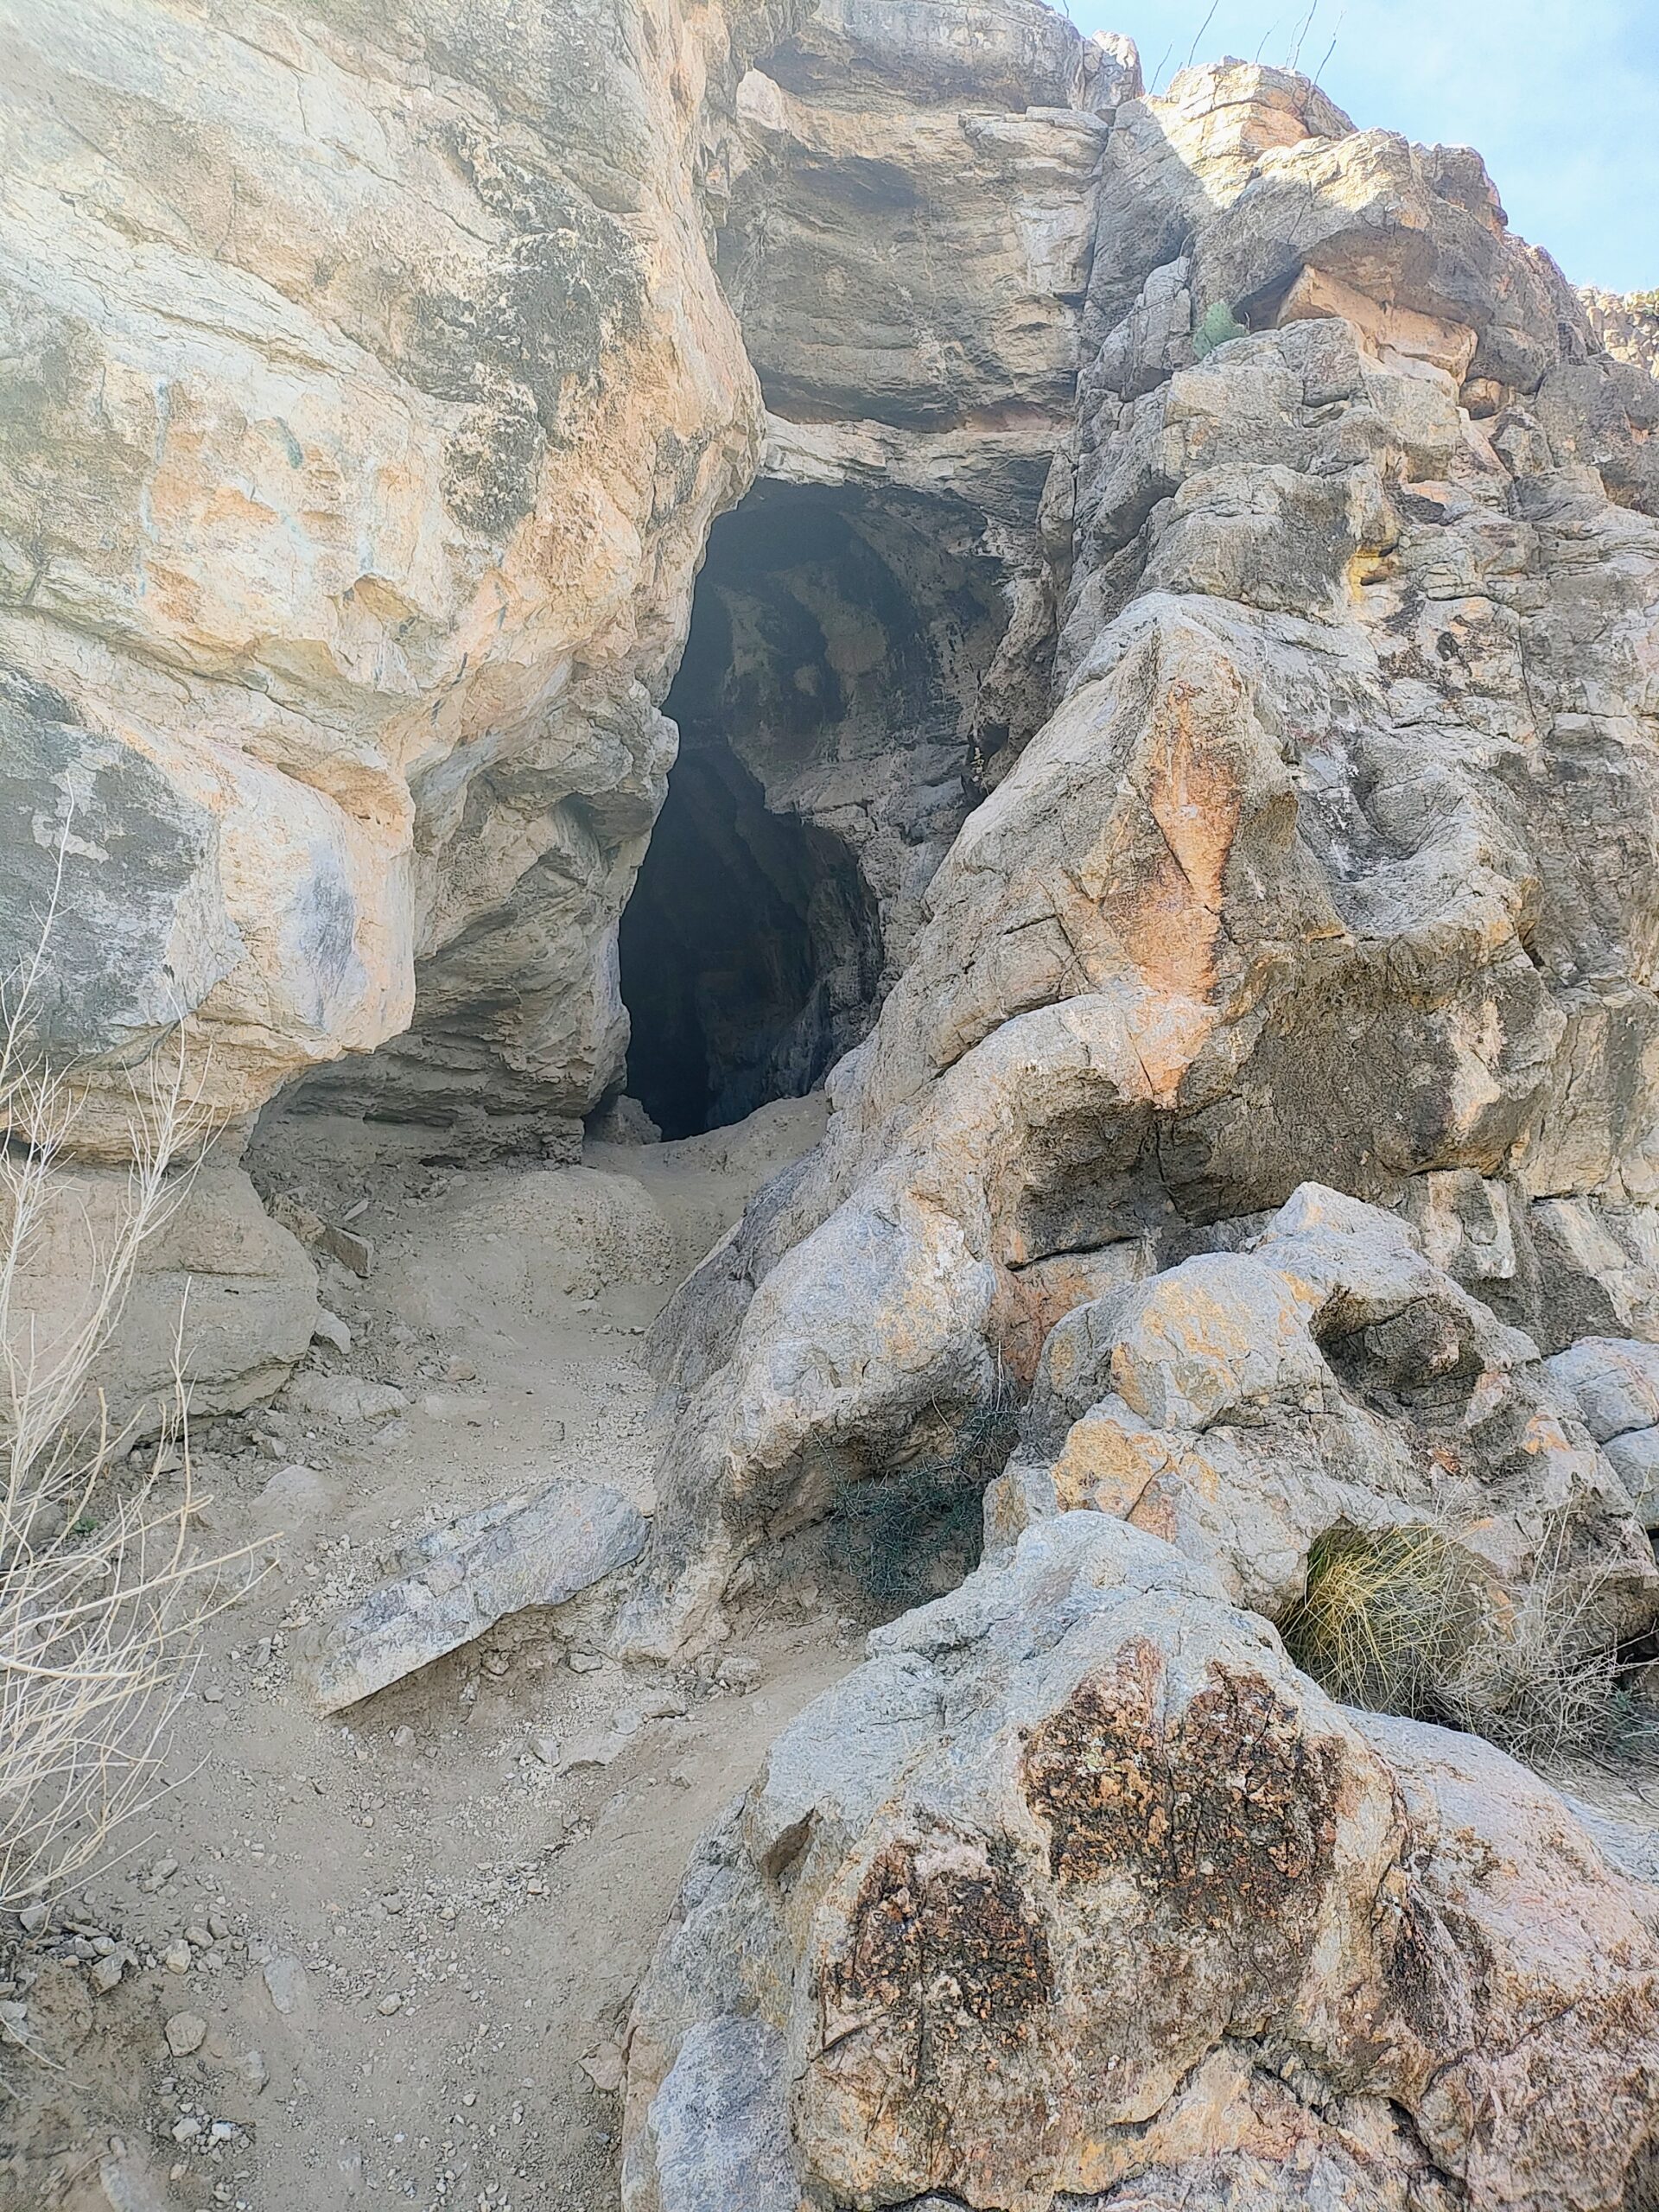 Geronimo’s Cave